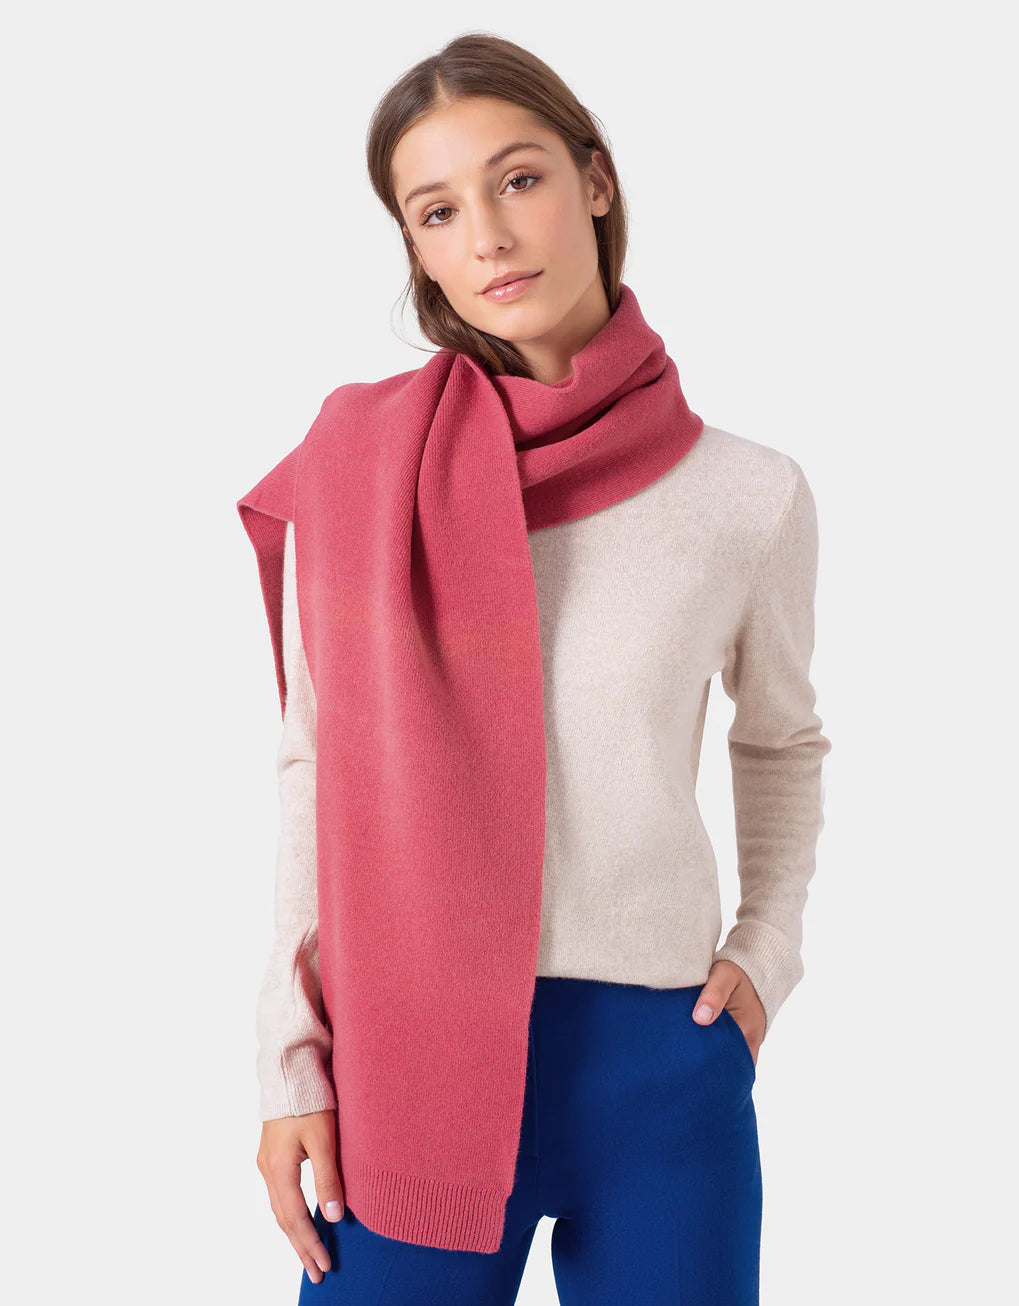 Merino Wool Scarf Pink